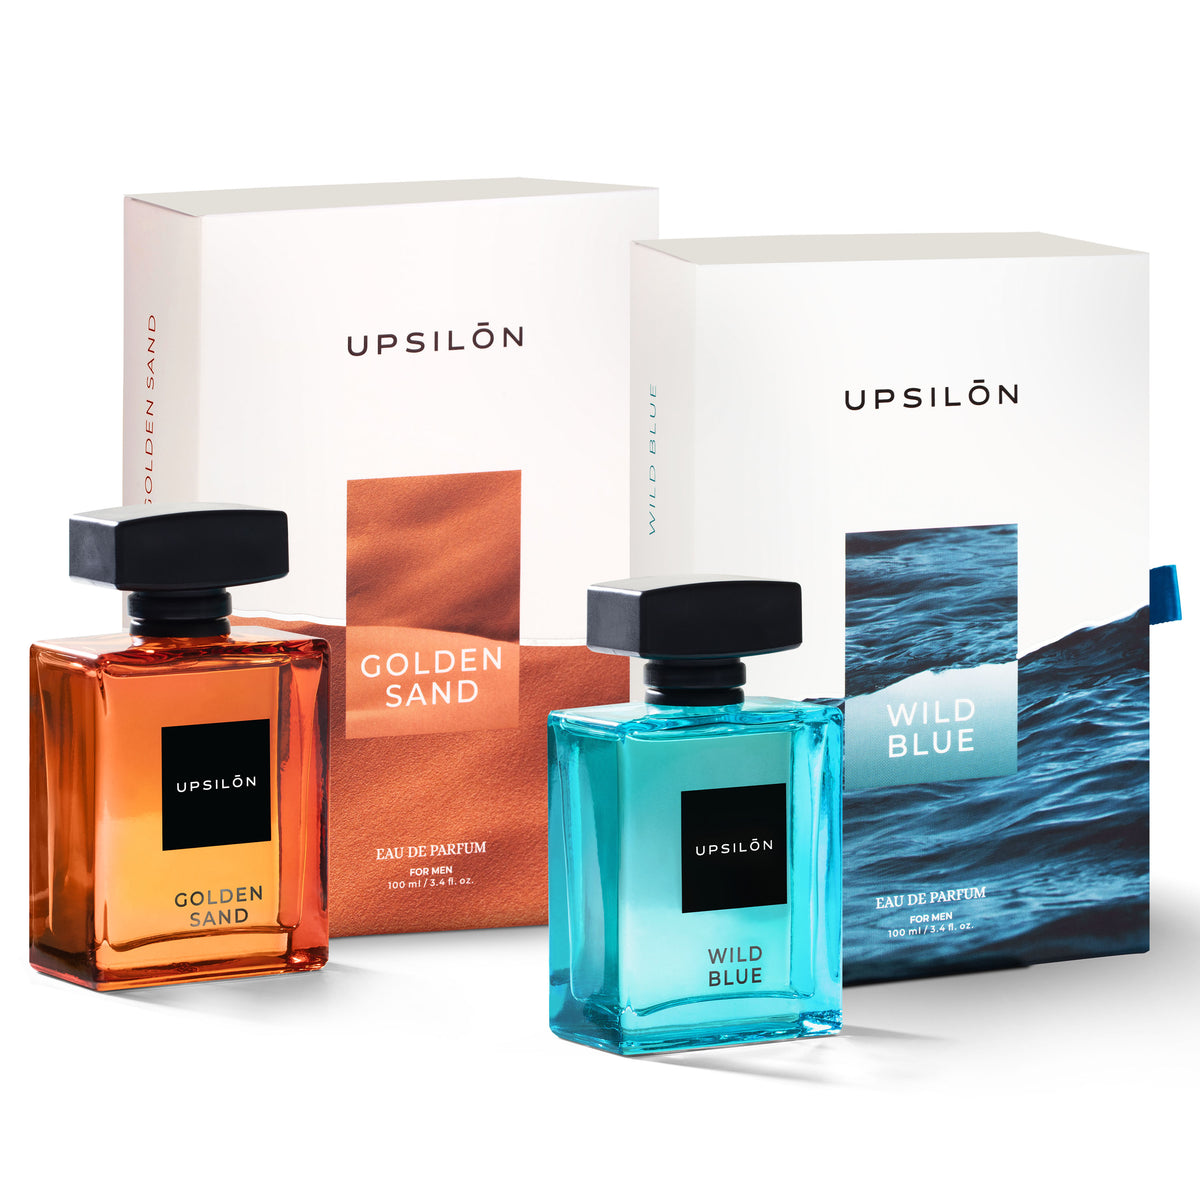 Two Upsilon Eau de Parfum bottles for men, Golden Sand and Wild Blue, in a gift box.